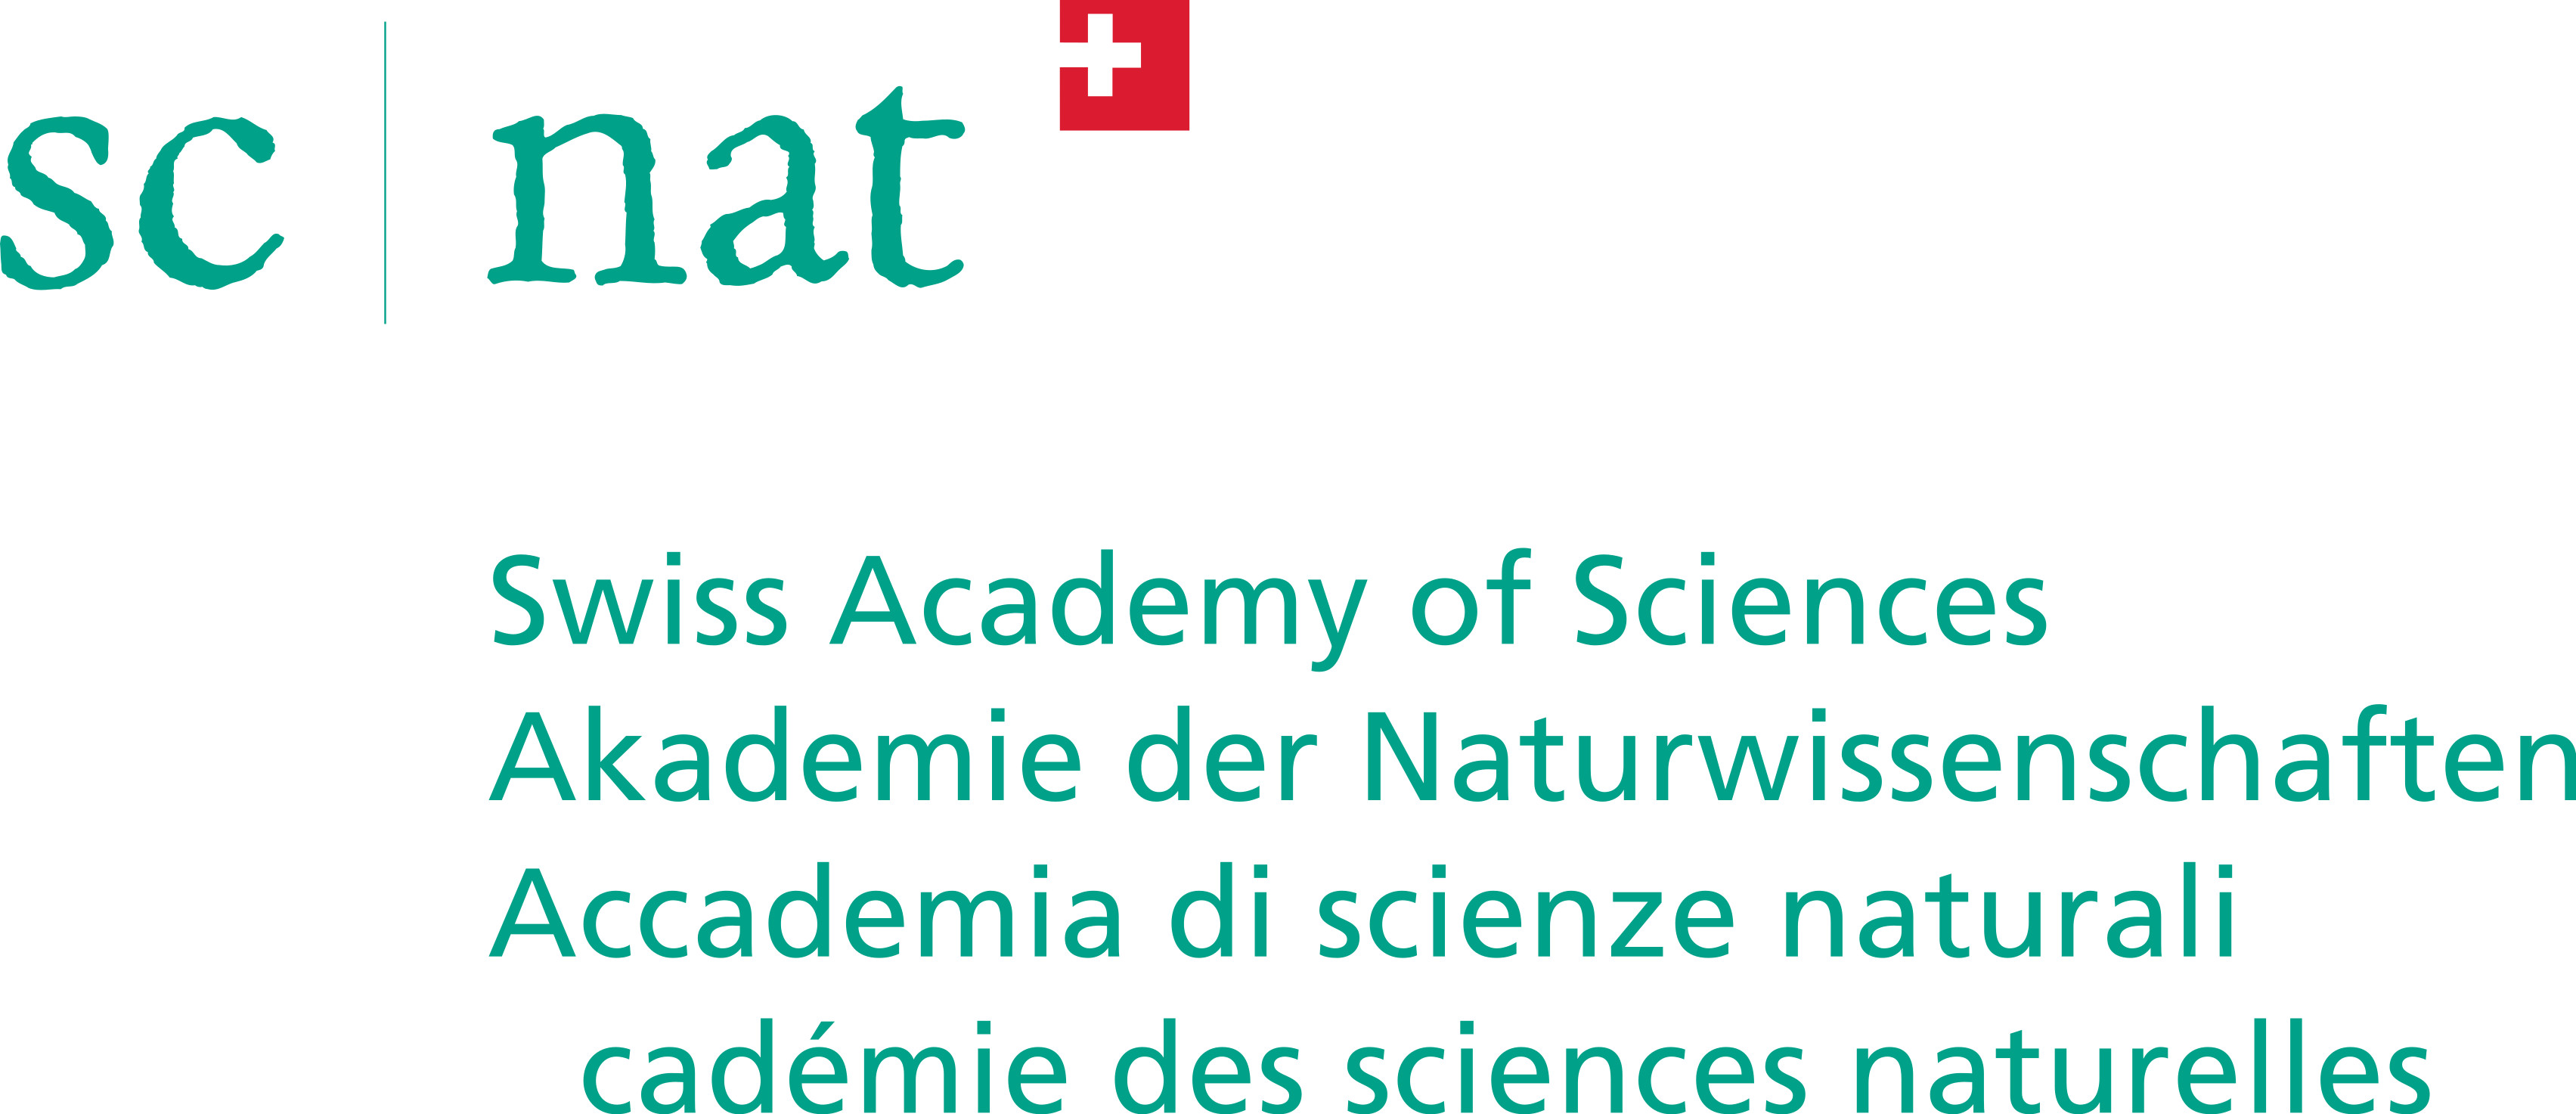 Swiss Academy of Sciences - SCNAT